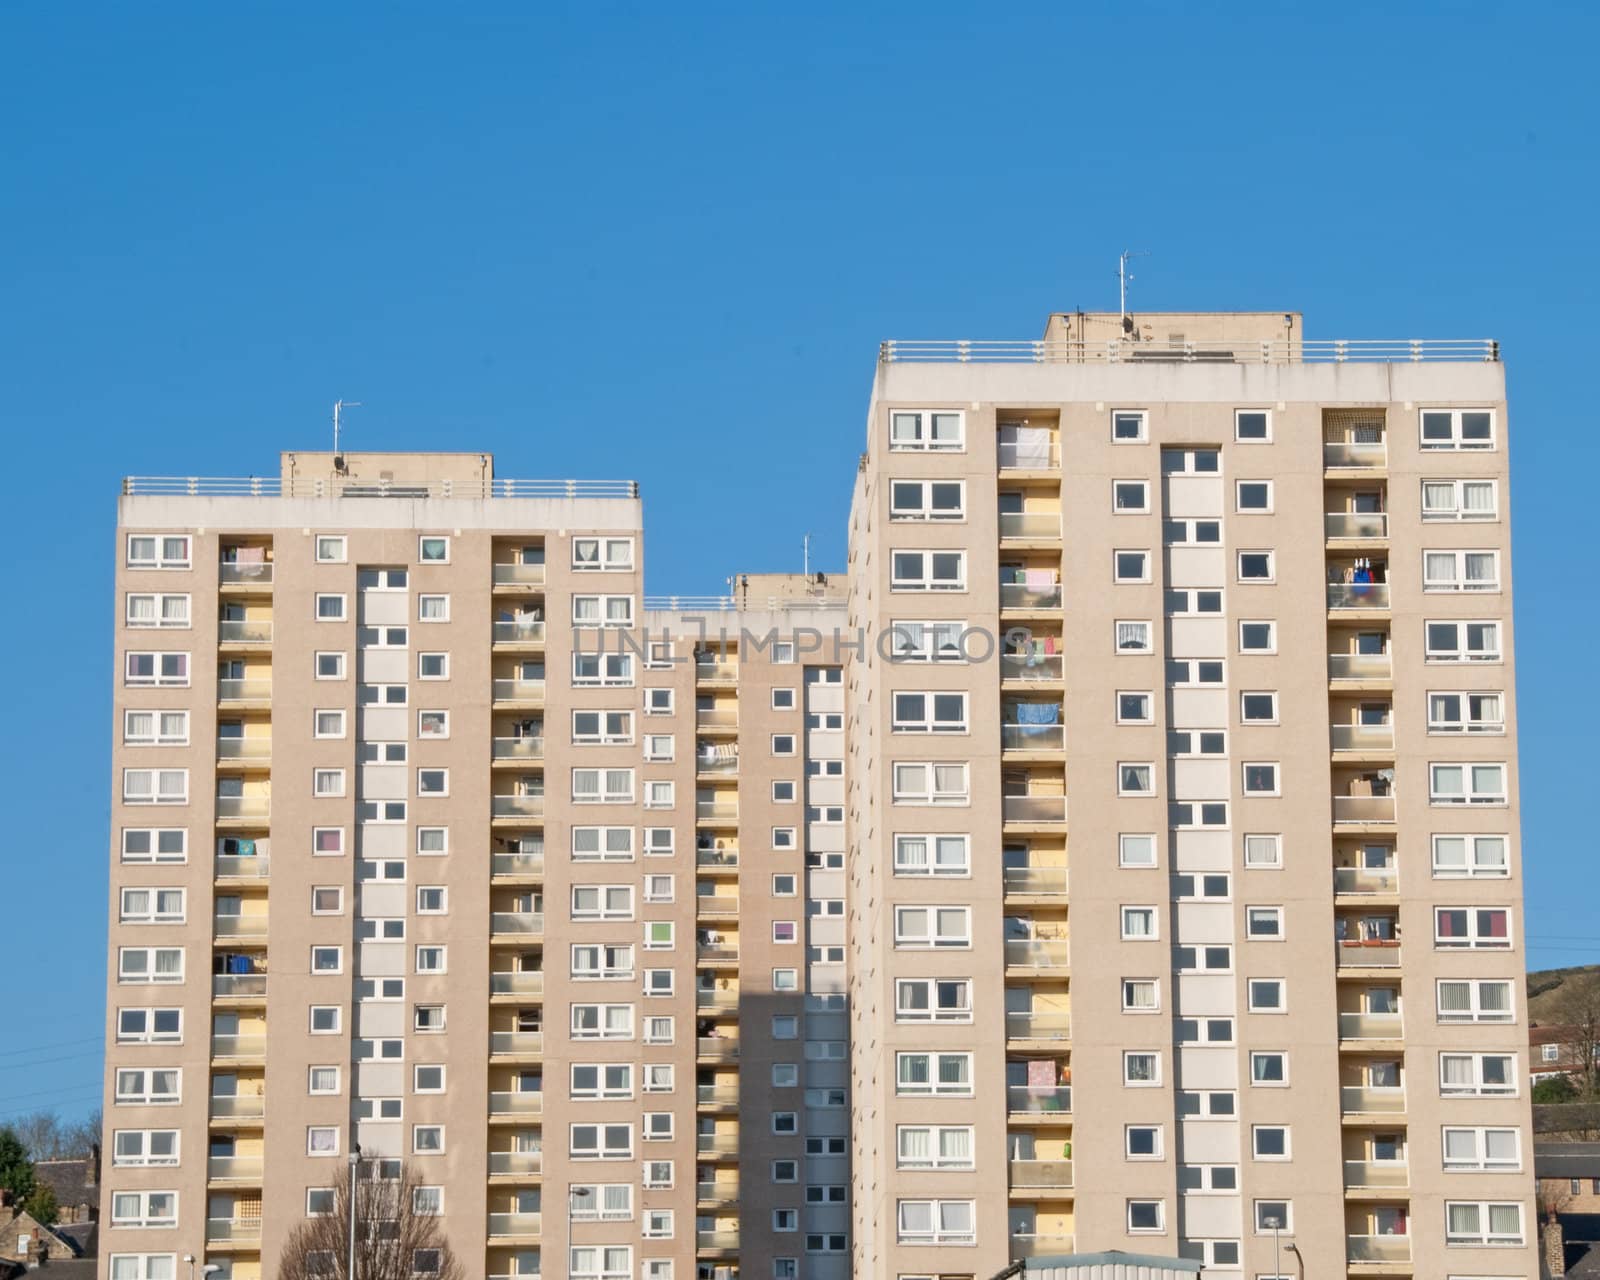 Council Apartment Blocks against a Blue Sky